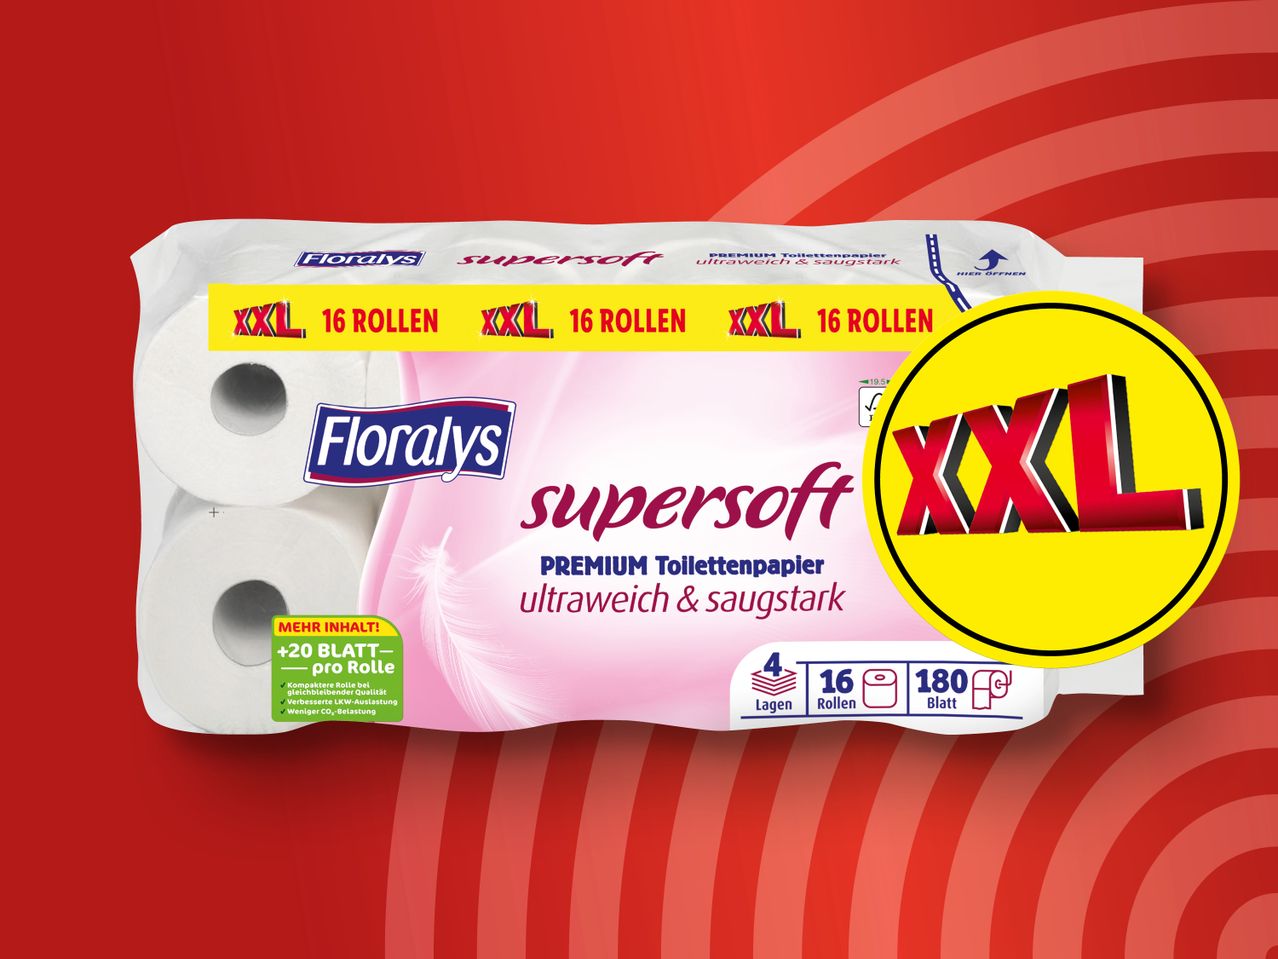 Premium Toilettenpapier XXL Supersoft Floralys